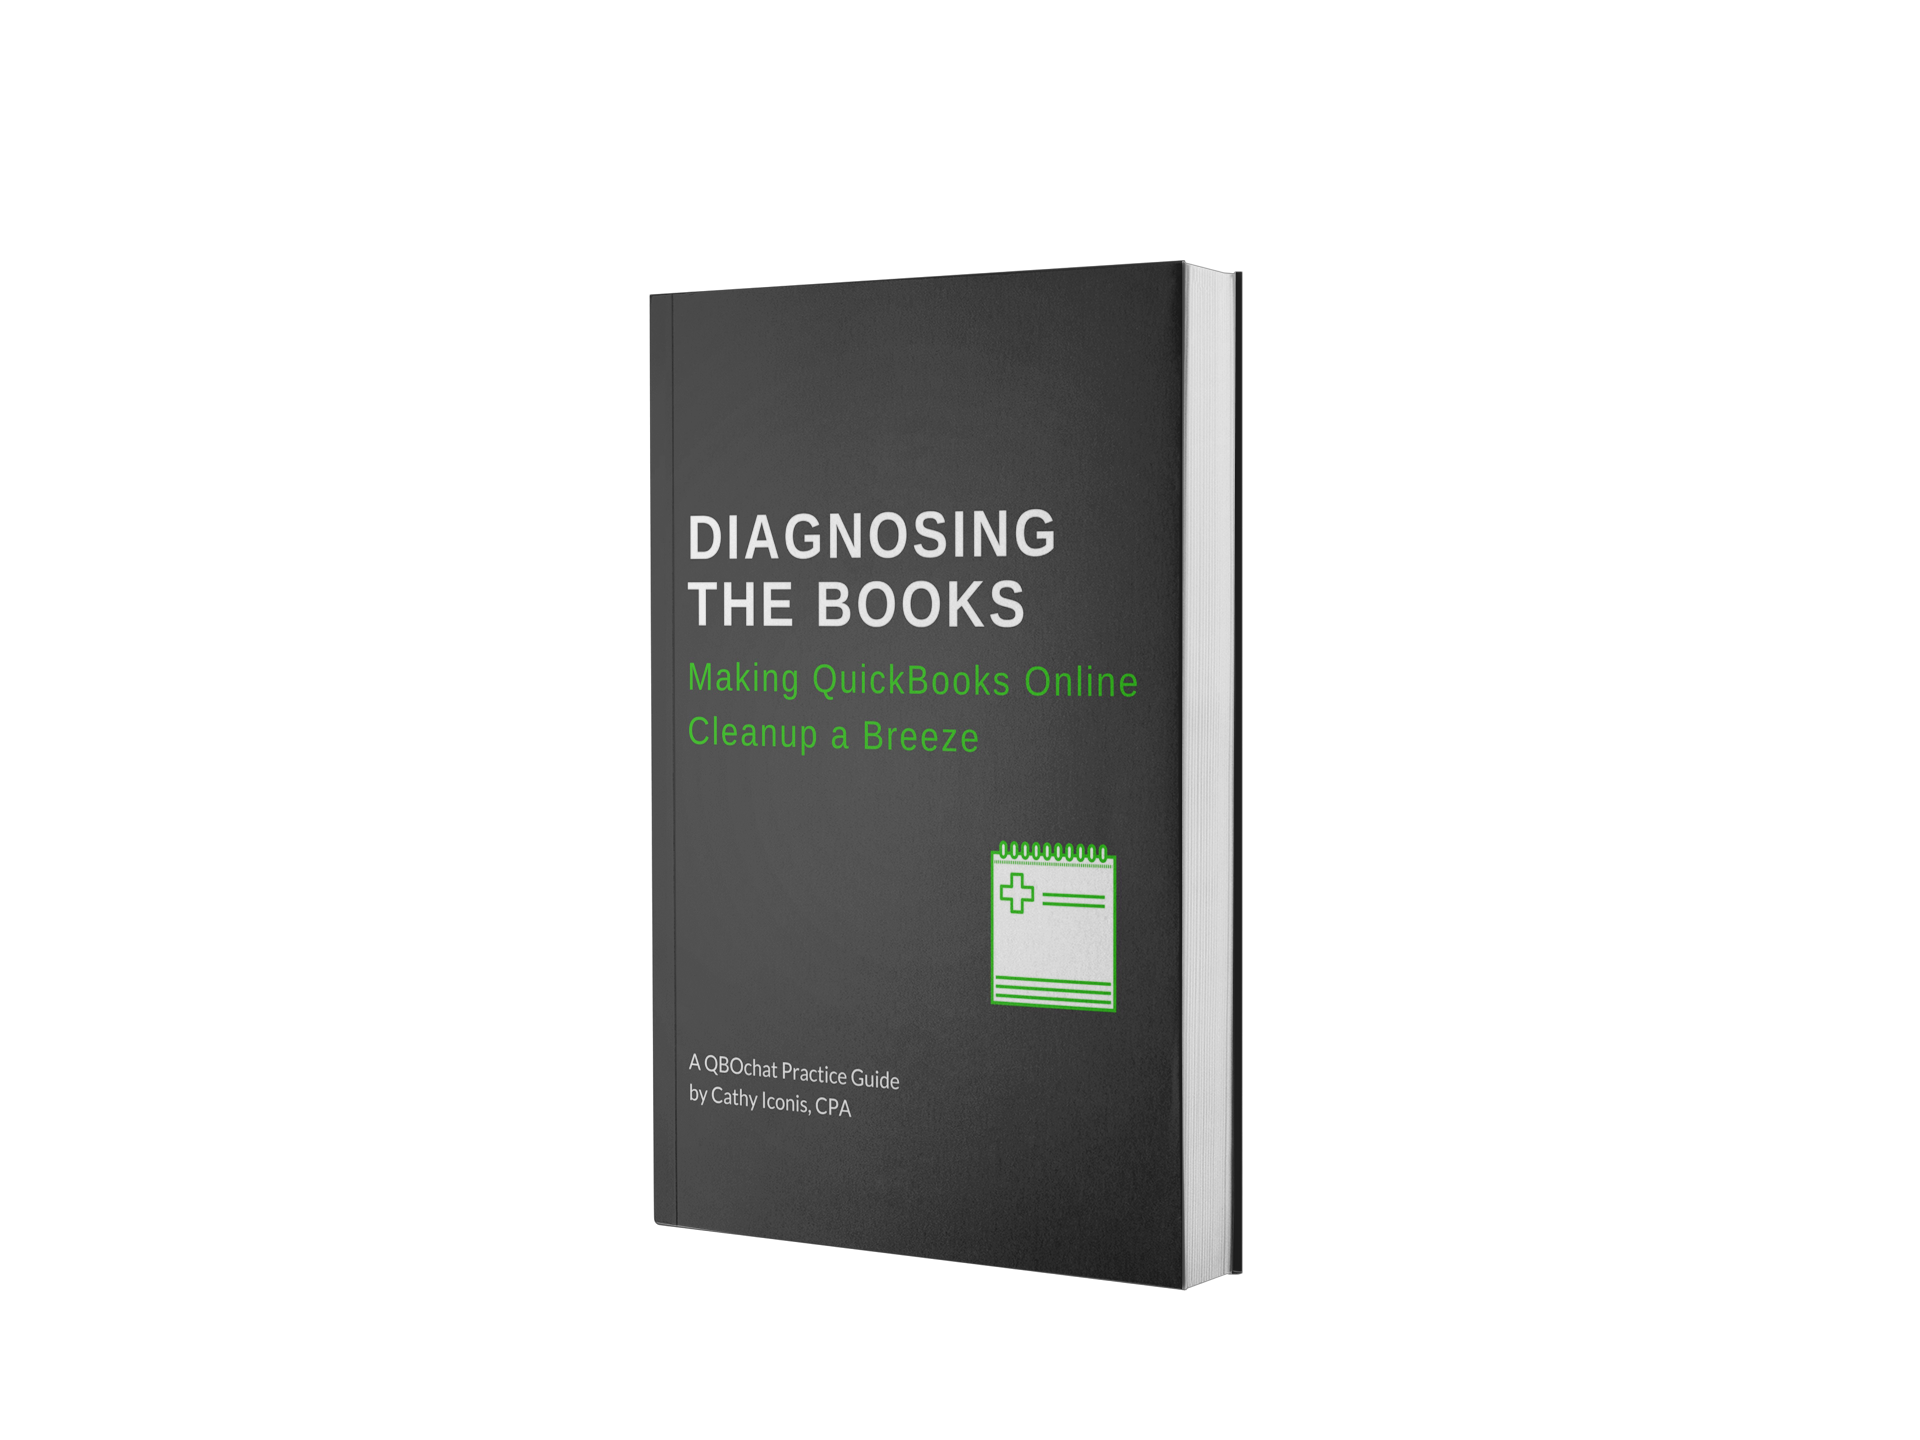 diagnosing-the-books-mockup-1